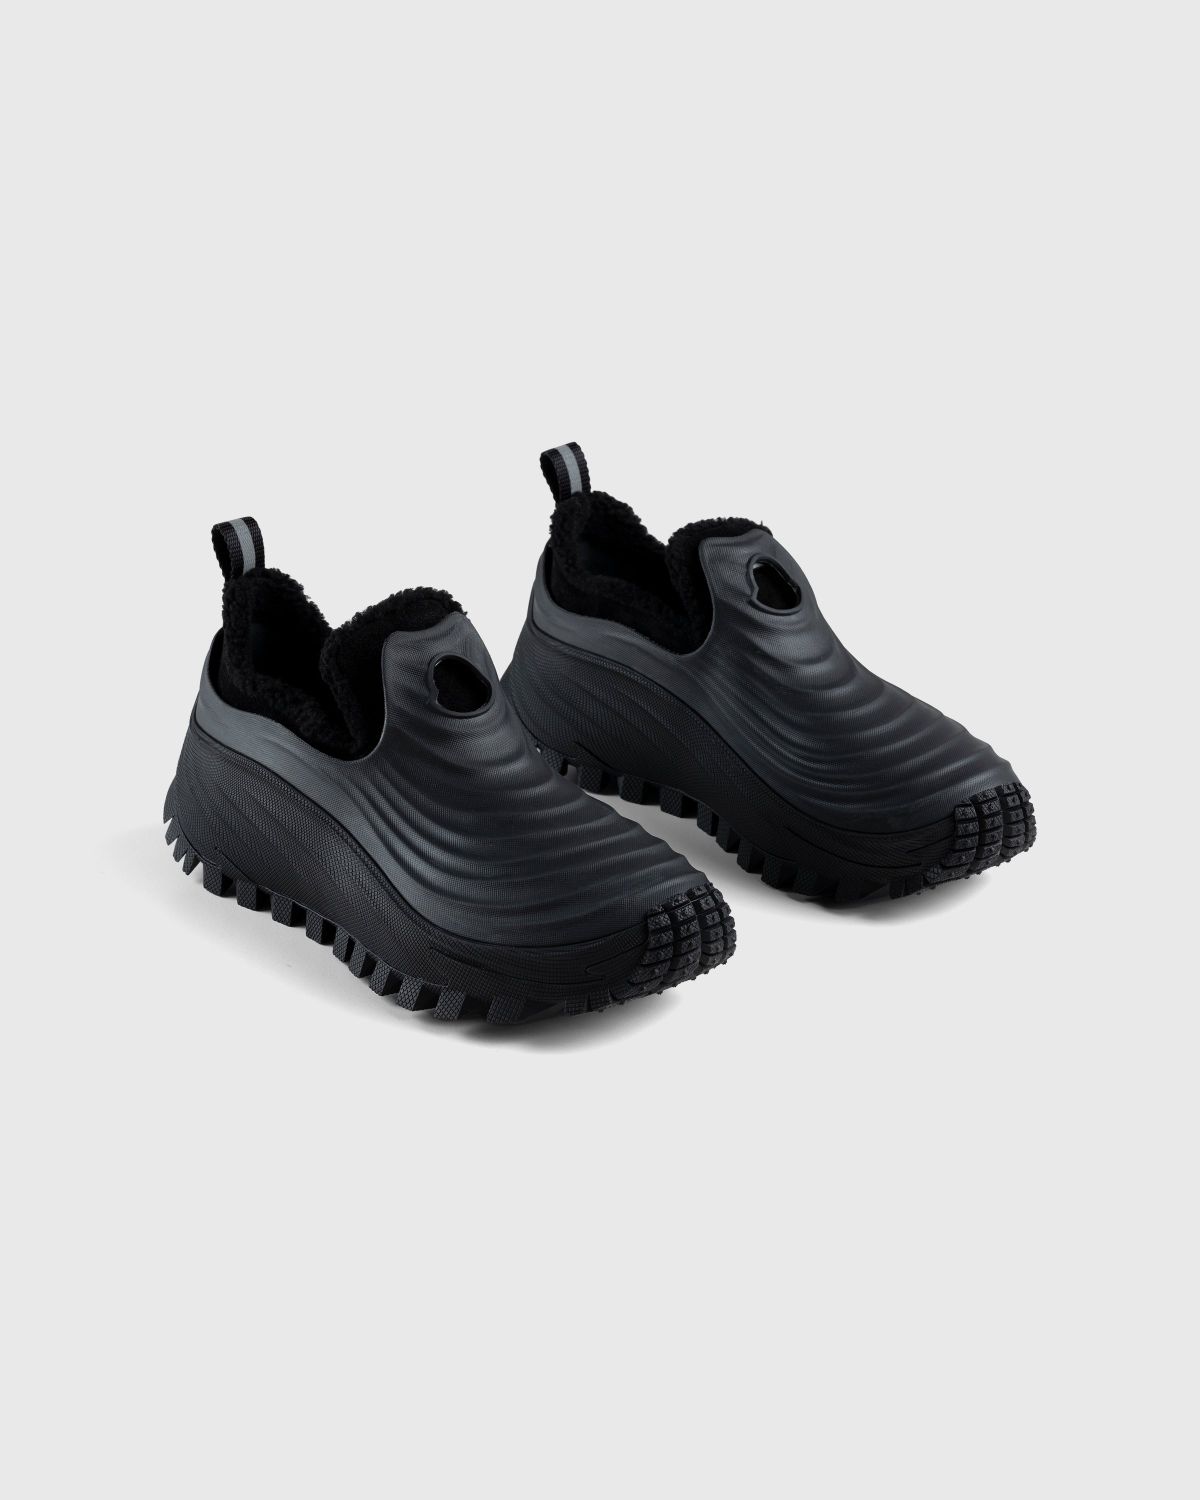 Moncler – Aqua Rain Boots Black - Boots - Brown - Image 3